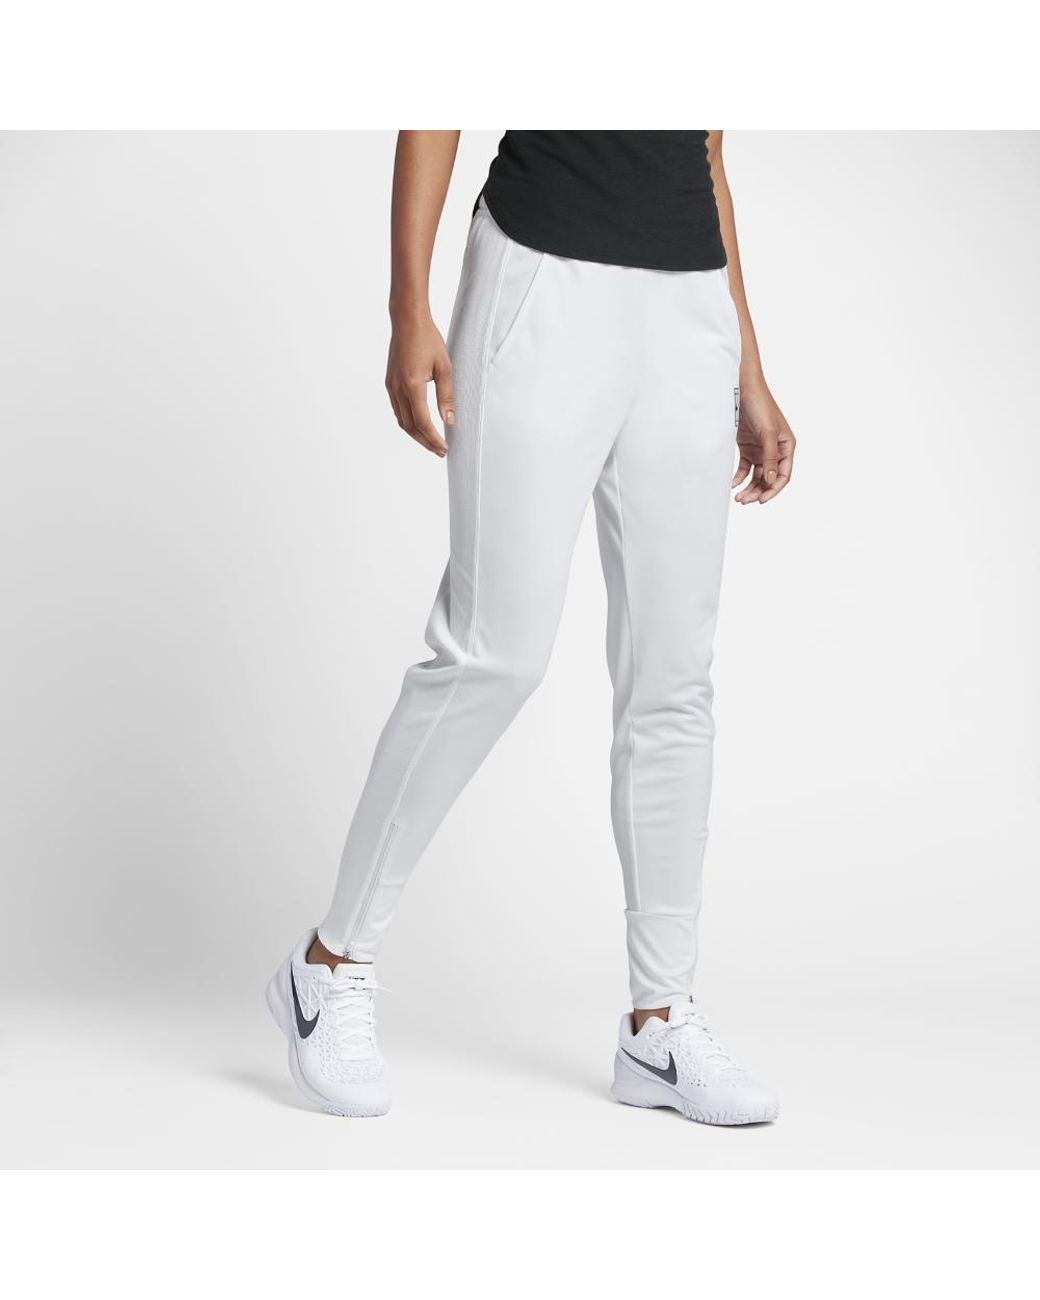 Nike Court Dry Women's Tennis Pants in White